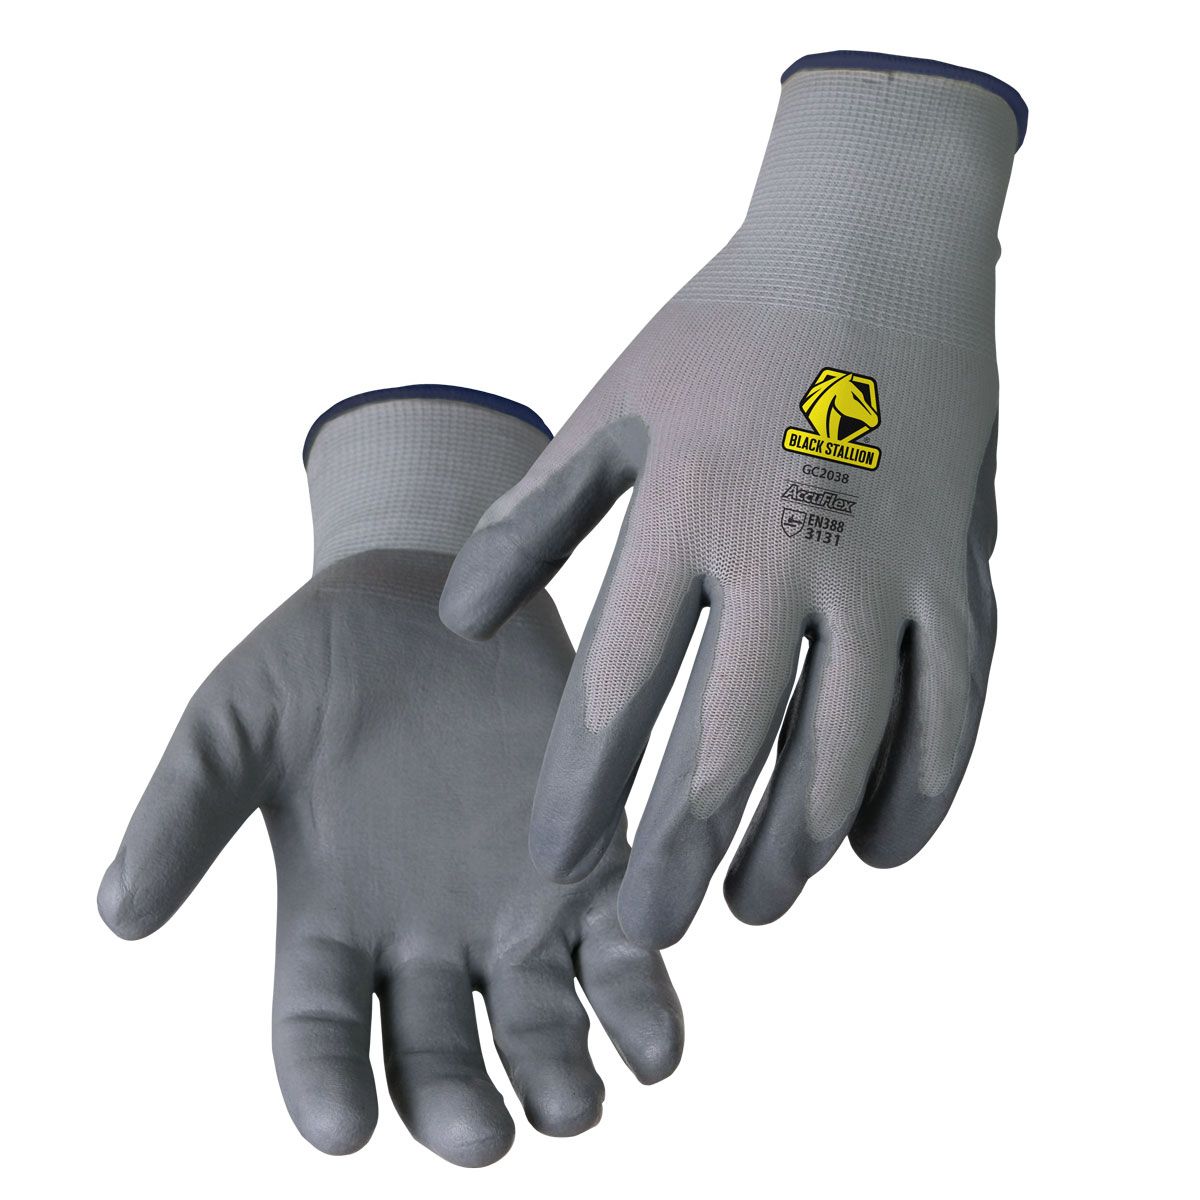 Revco Black Stallion Nitrile Foam Coated Palm Nylon Knit Gloves #GC2038-GY for sale online